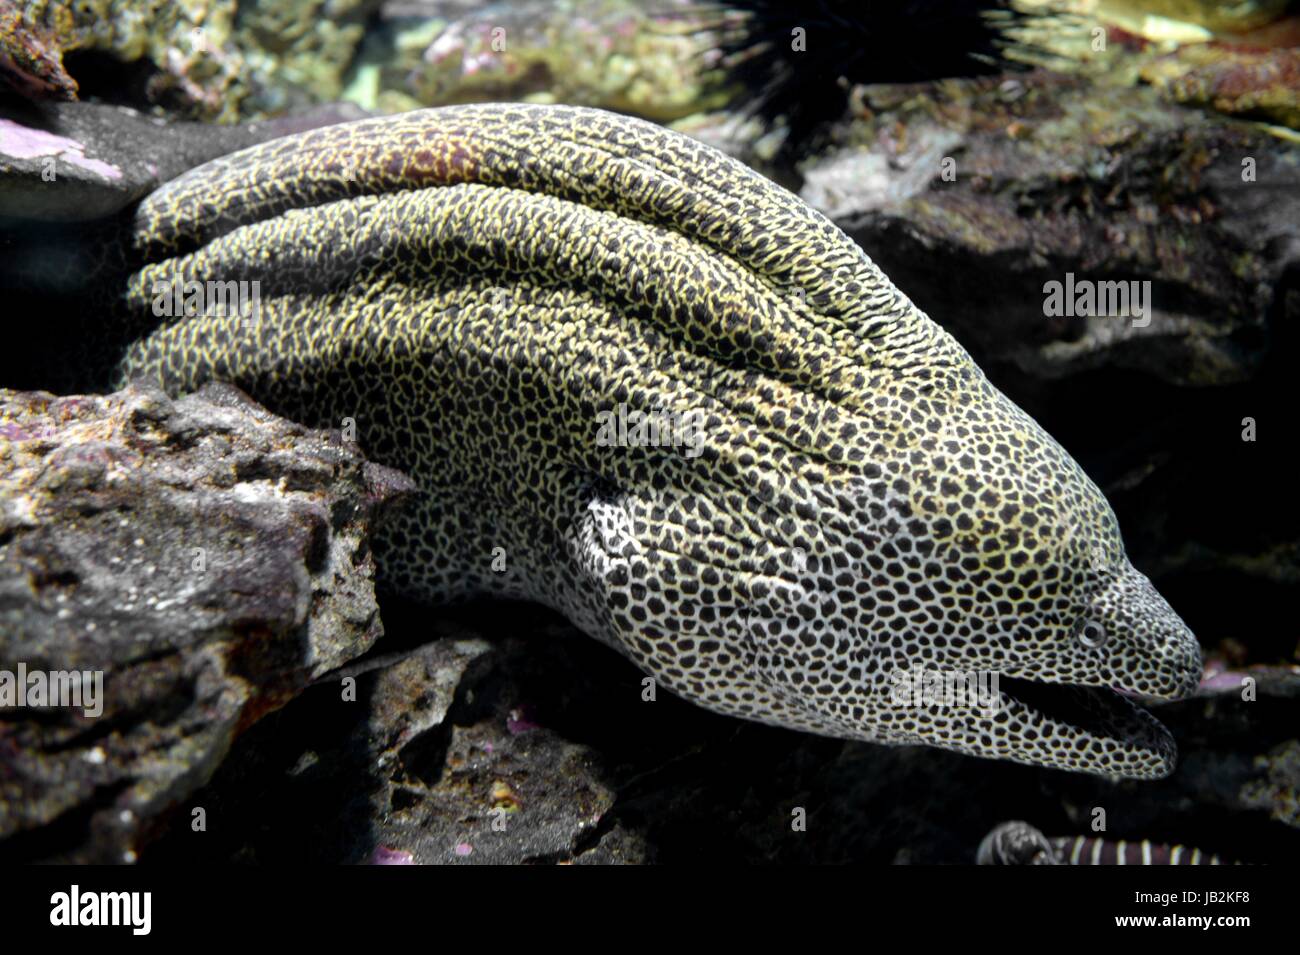 Close up shots of maine life in an aquarium Stock Photo